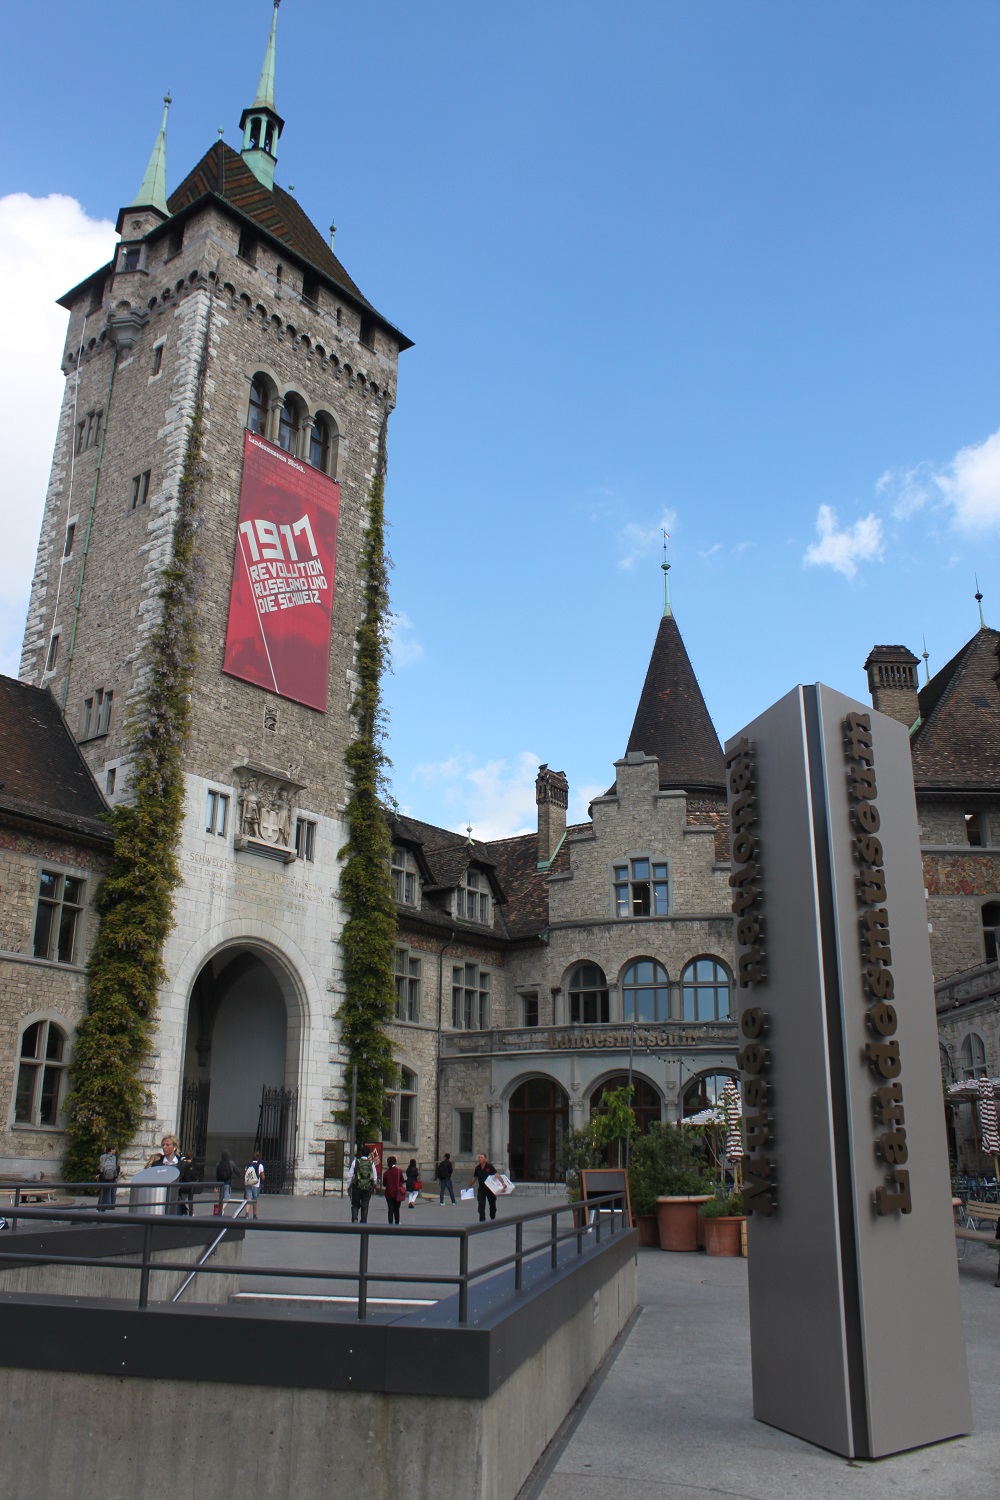 The Swiss National Museum, Zurich